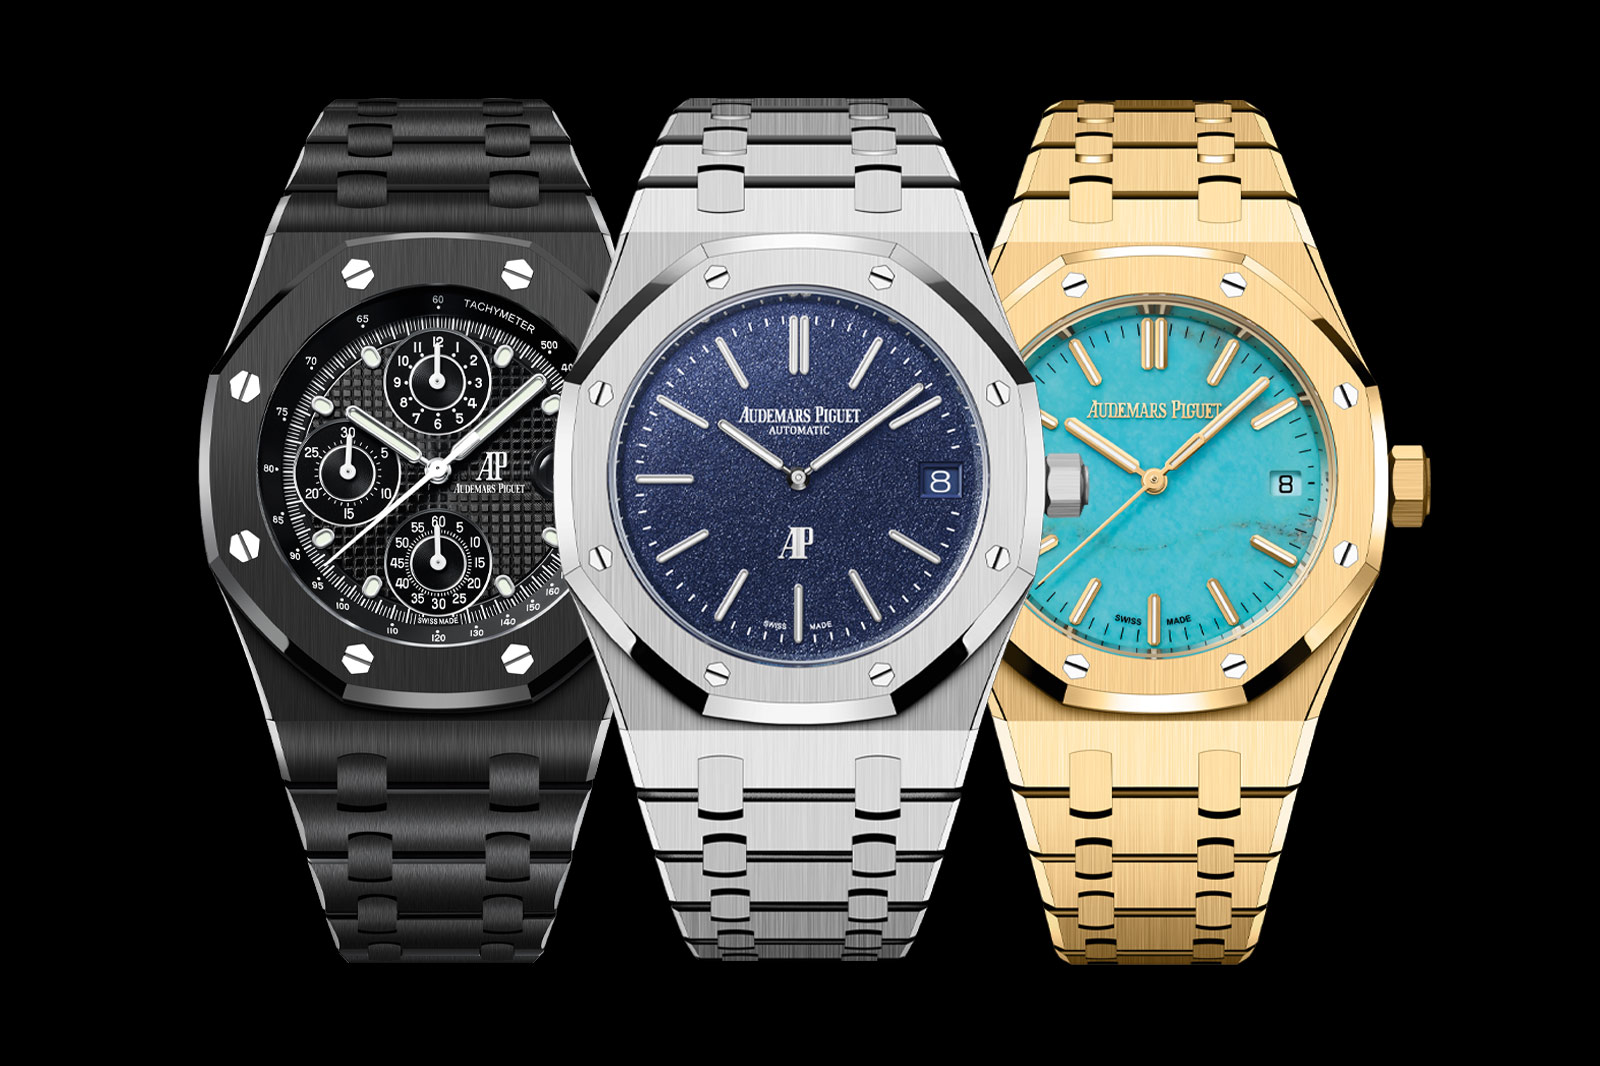 Audemars Piguet introduced new watches this week